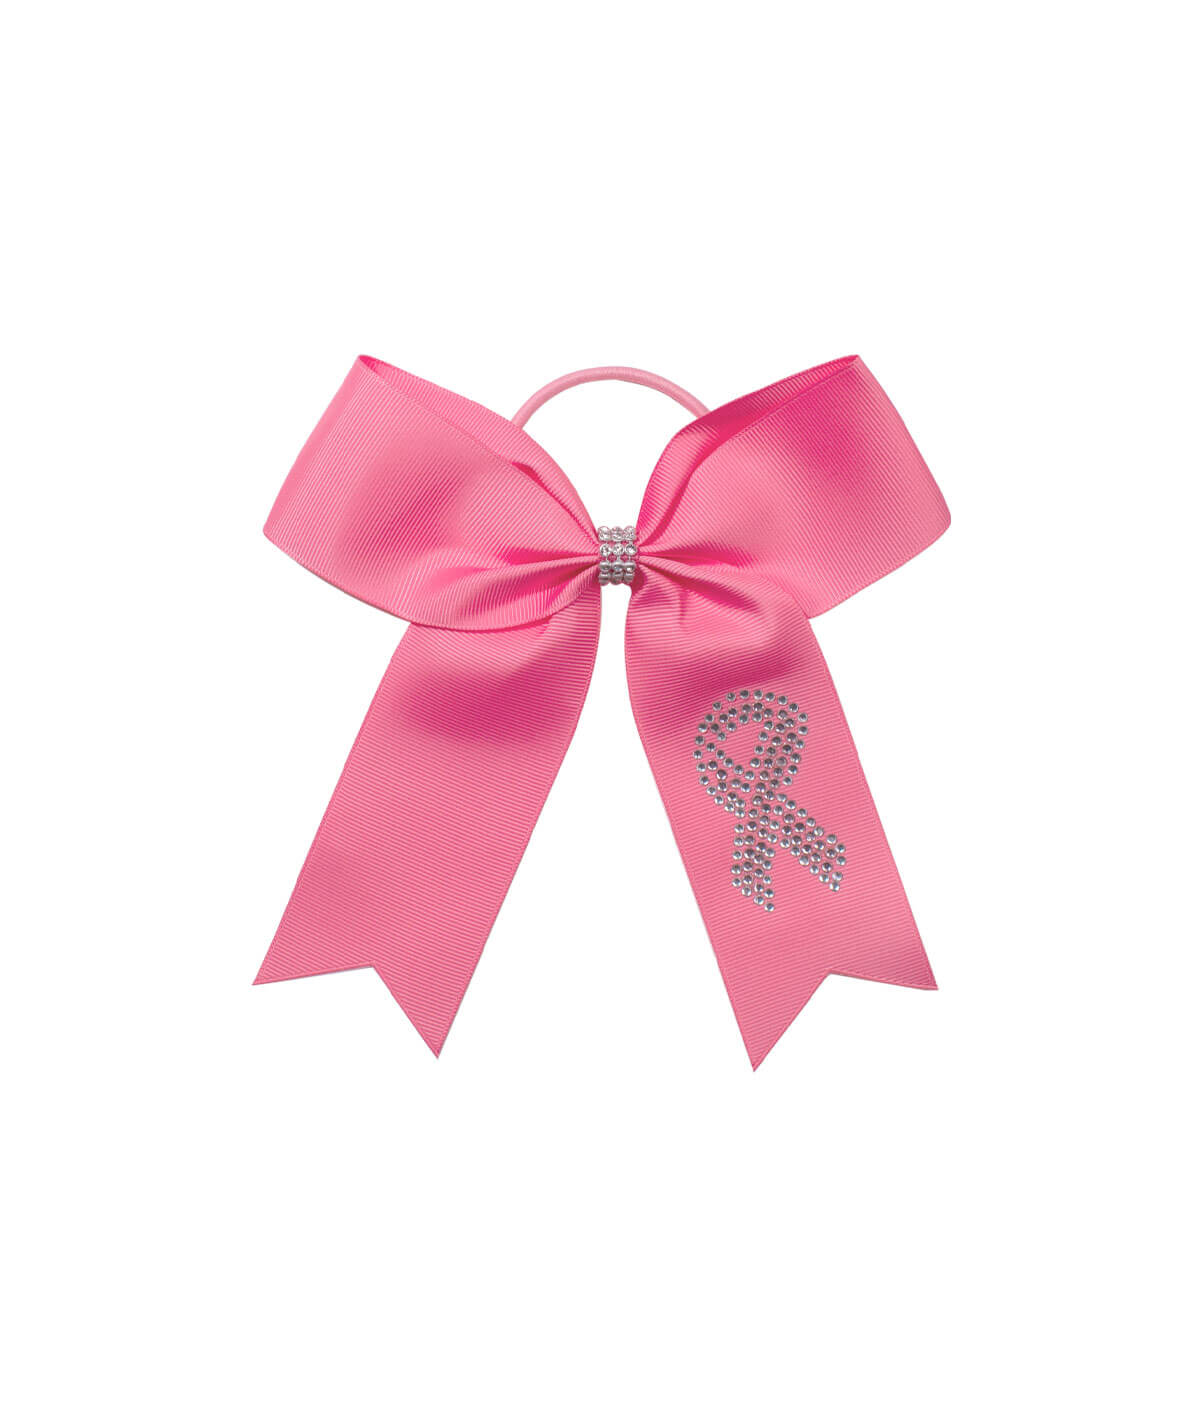 Pink Ribbons Cancer Awareness - Stitchery X-Press